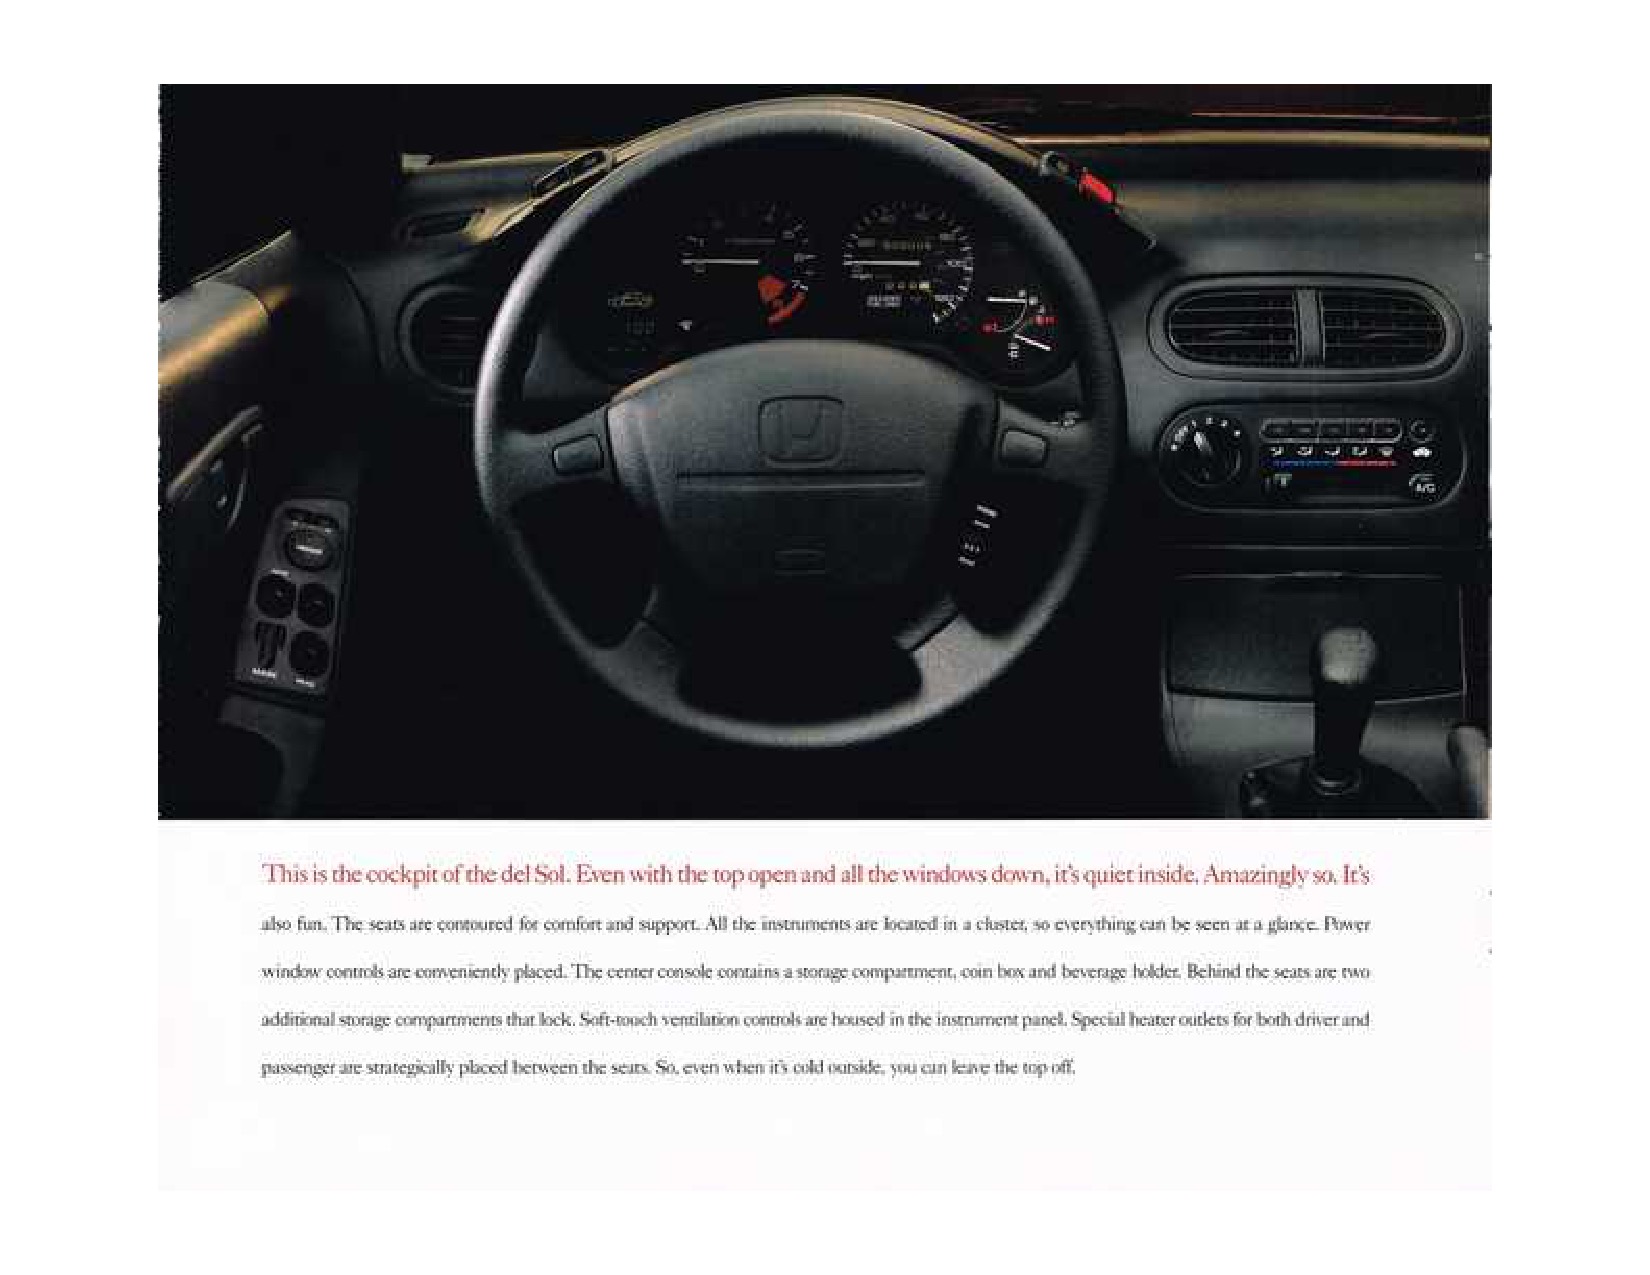 1993 Honda Civic delSol Brochure Page 8